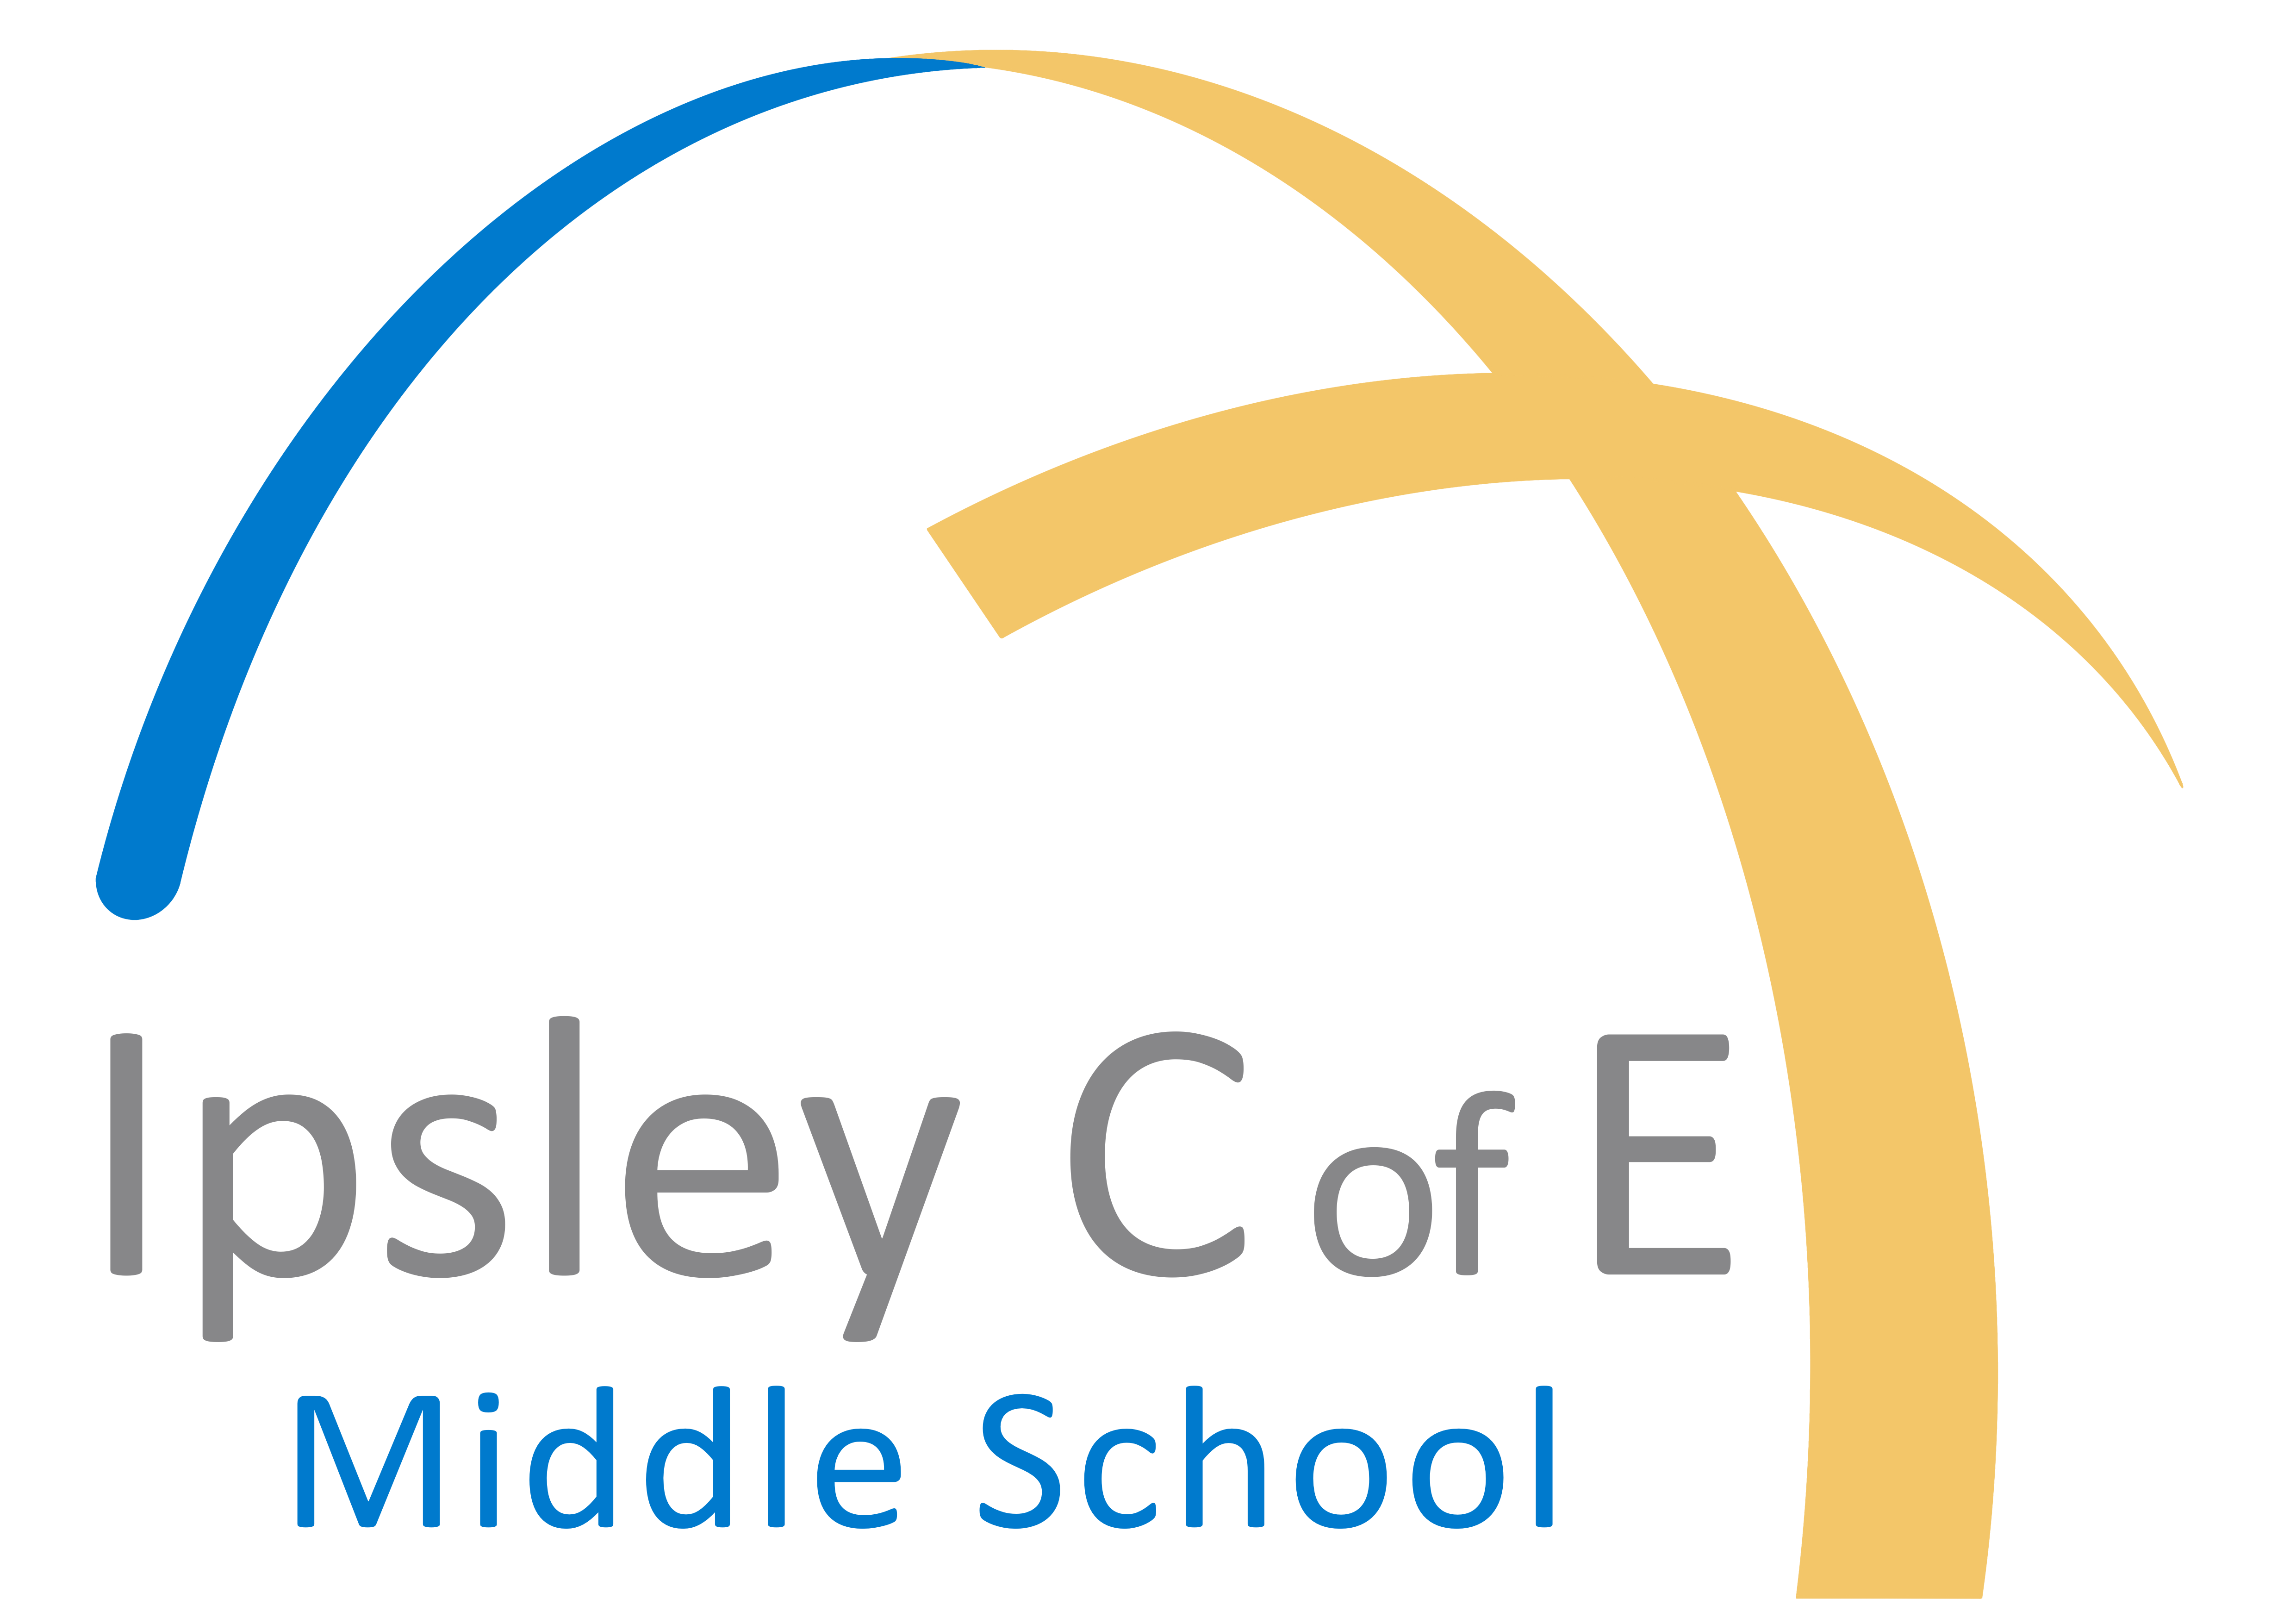 Ipsley CE Middle School